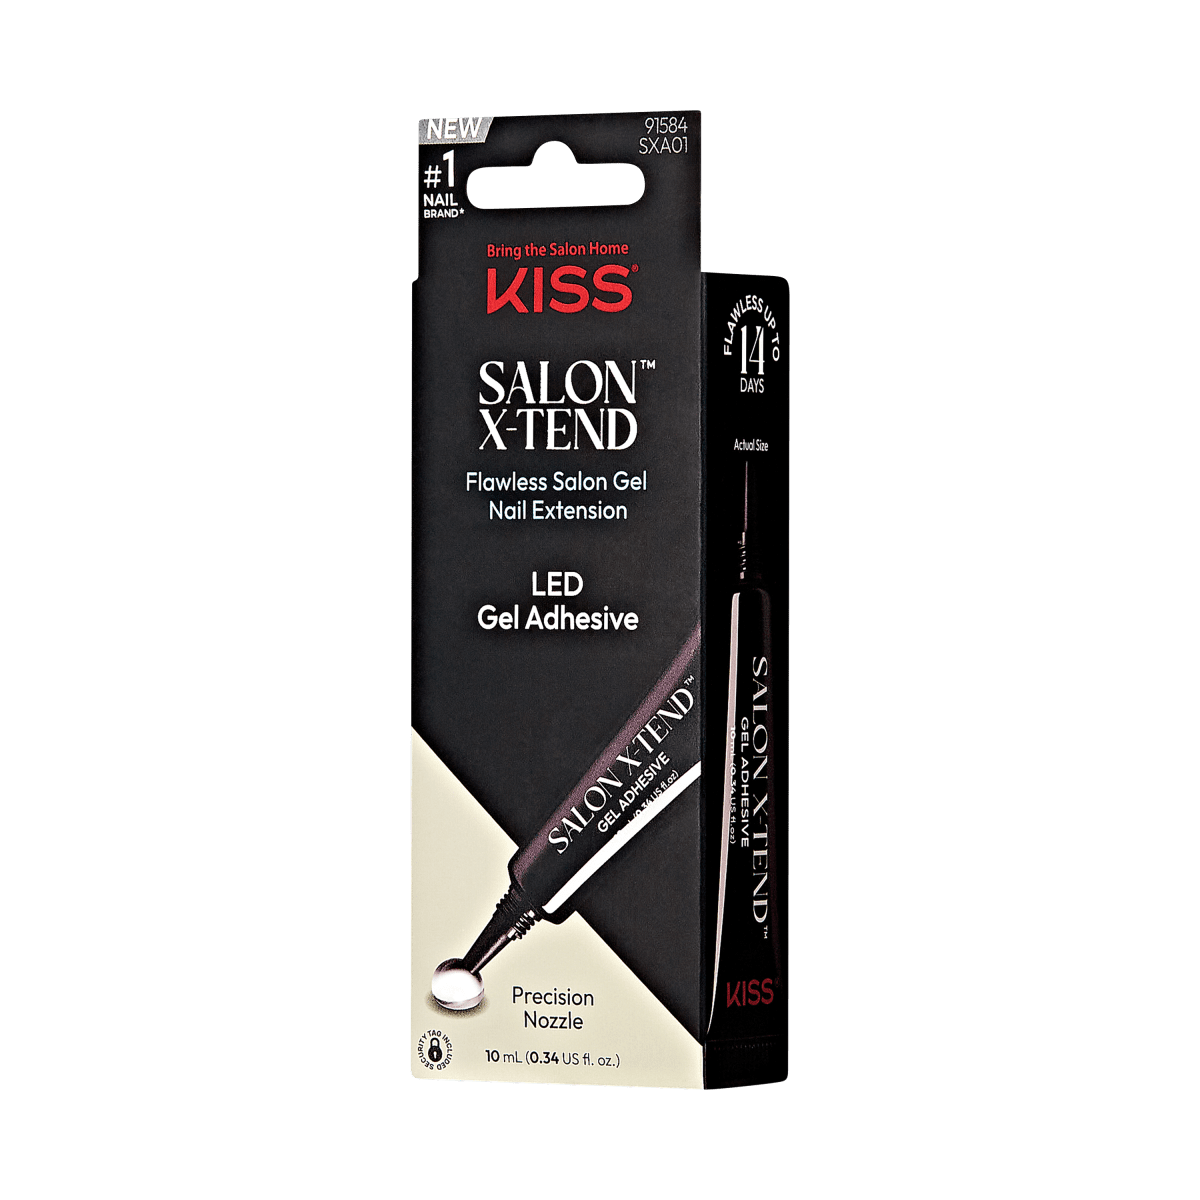 KISS Salon X-tend LED Gel Adhesive